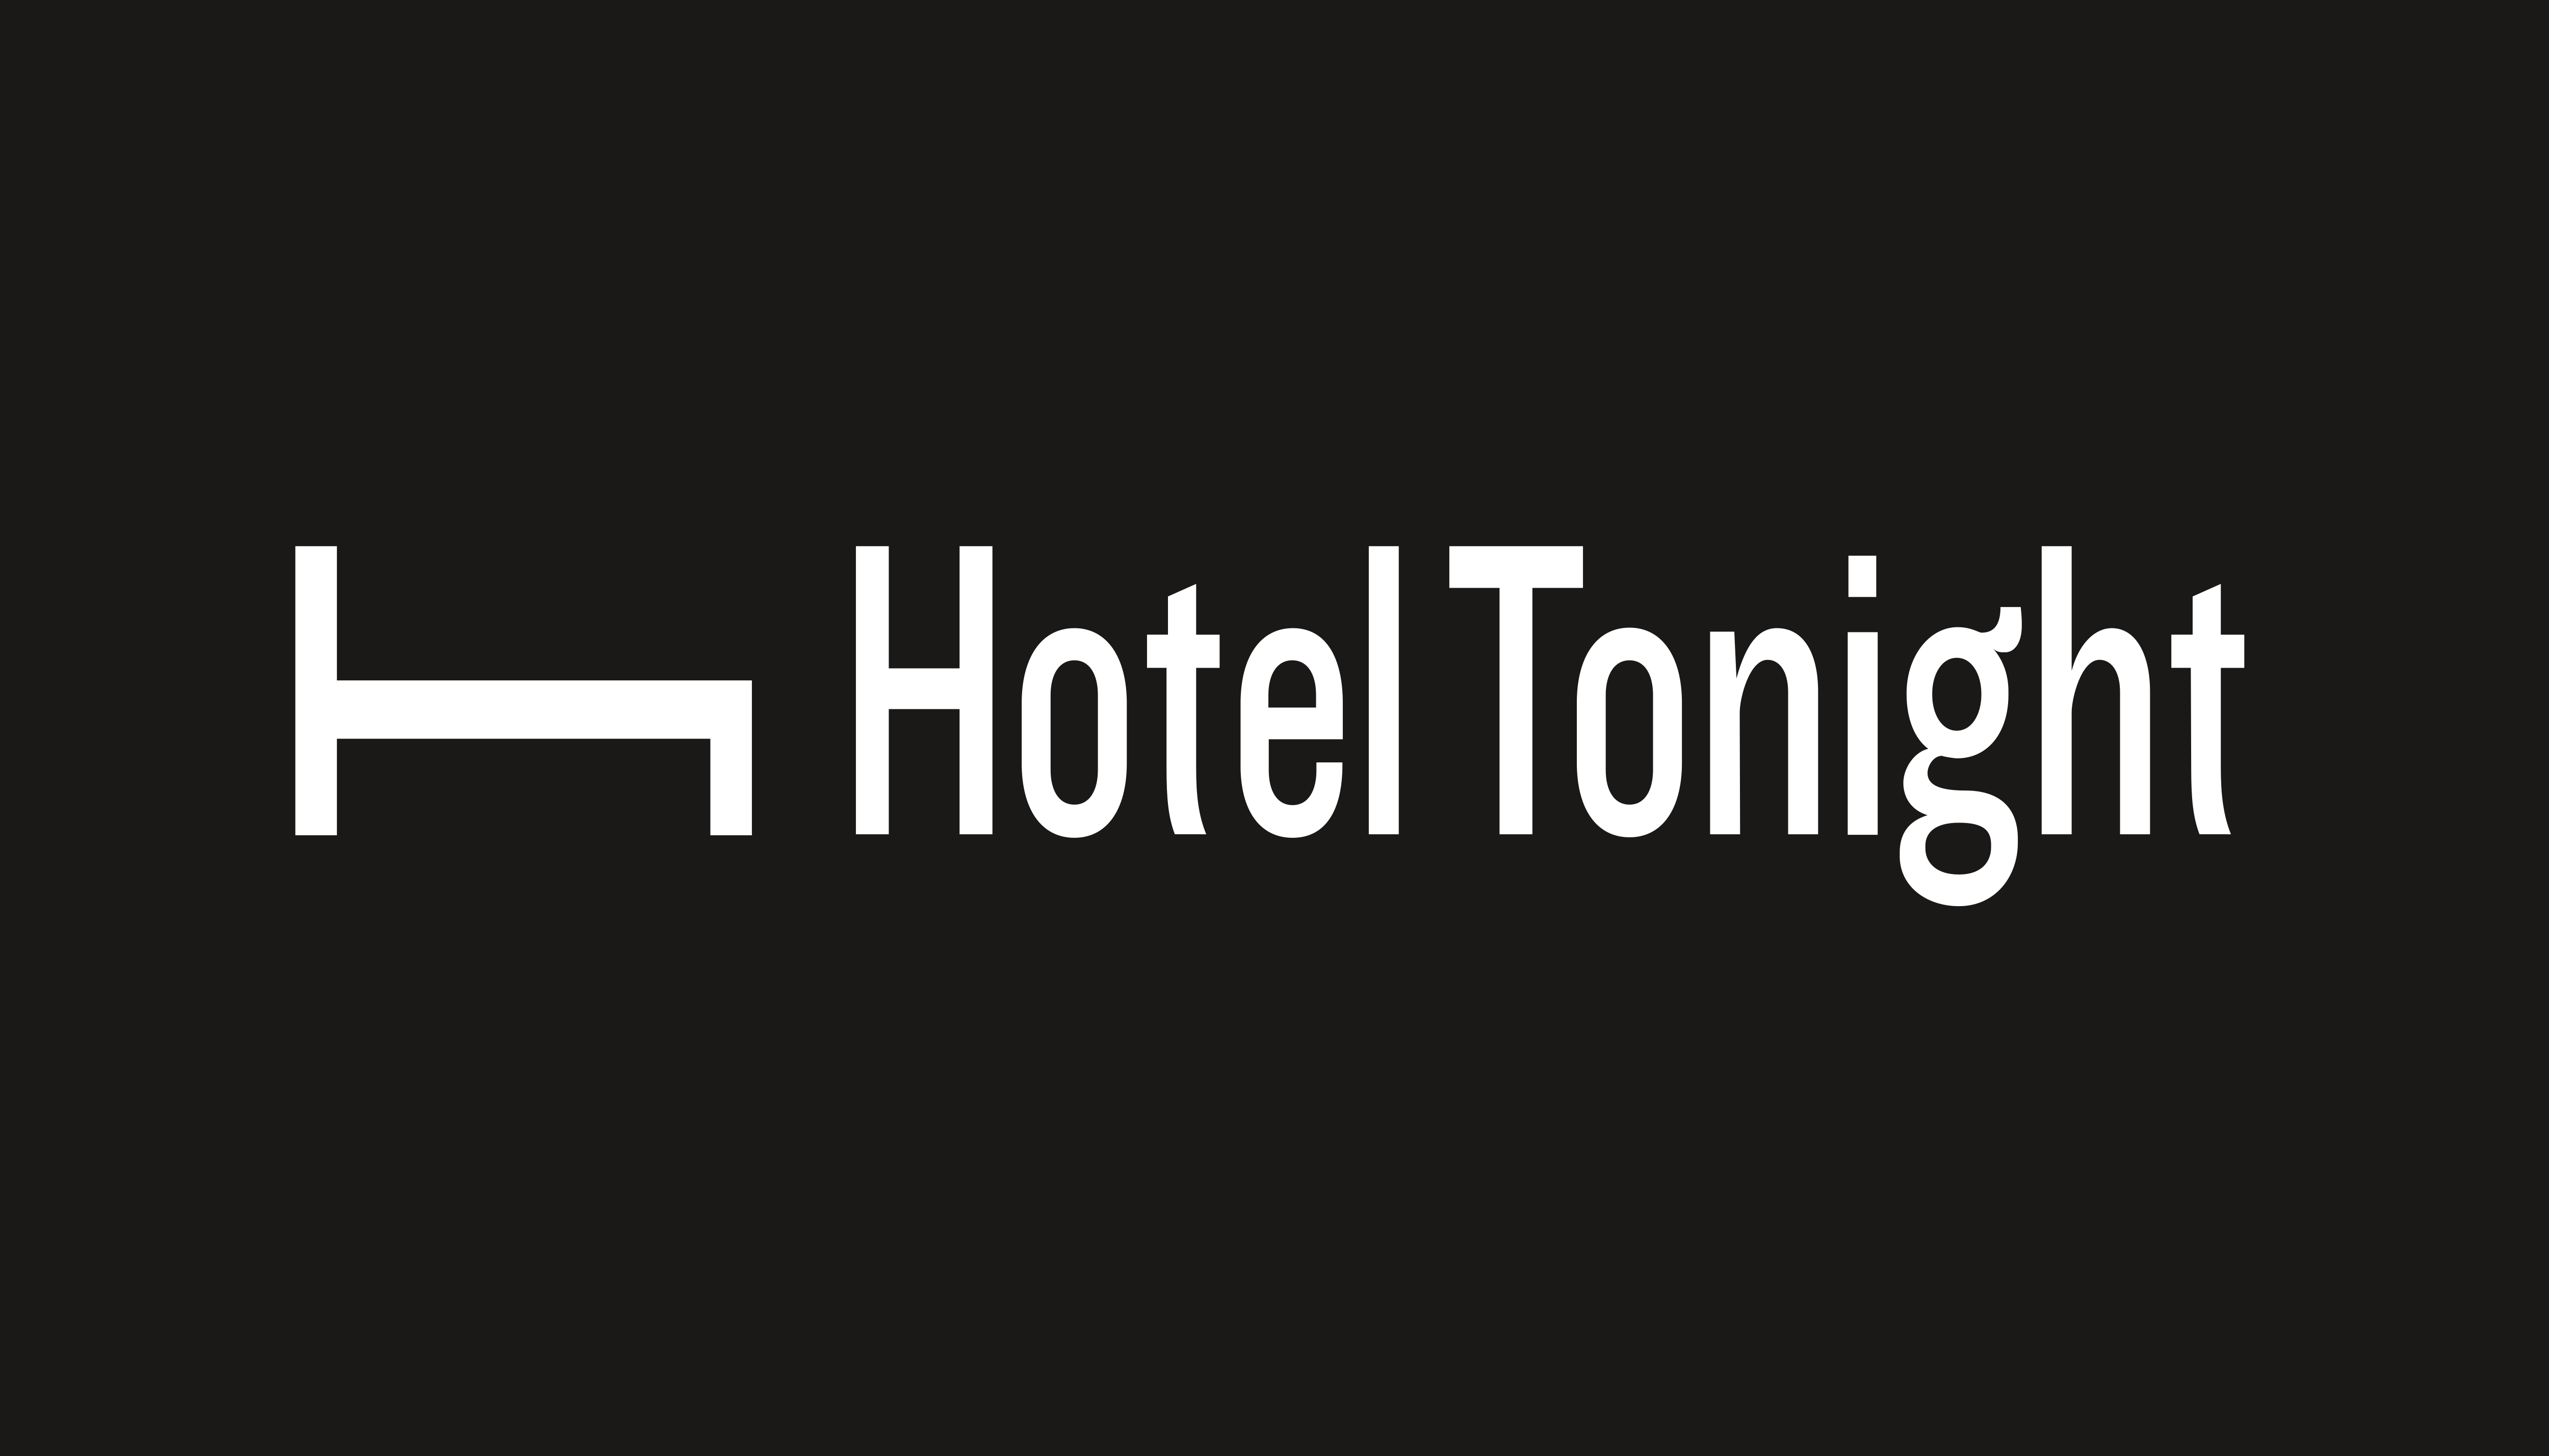 Tonight Logo - Hotel Tonight – Logos Download